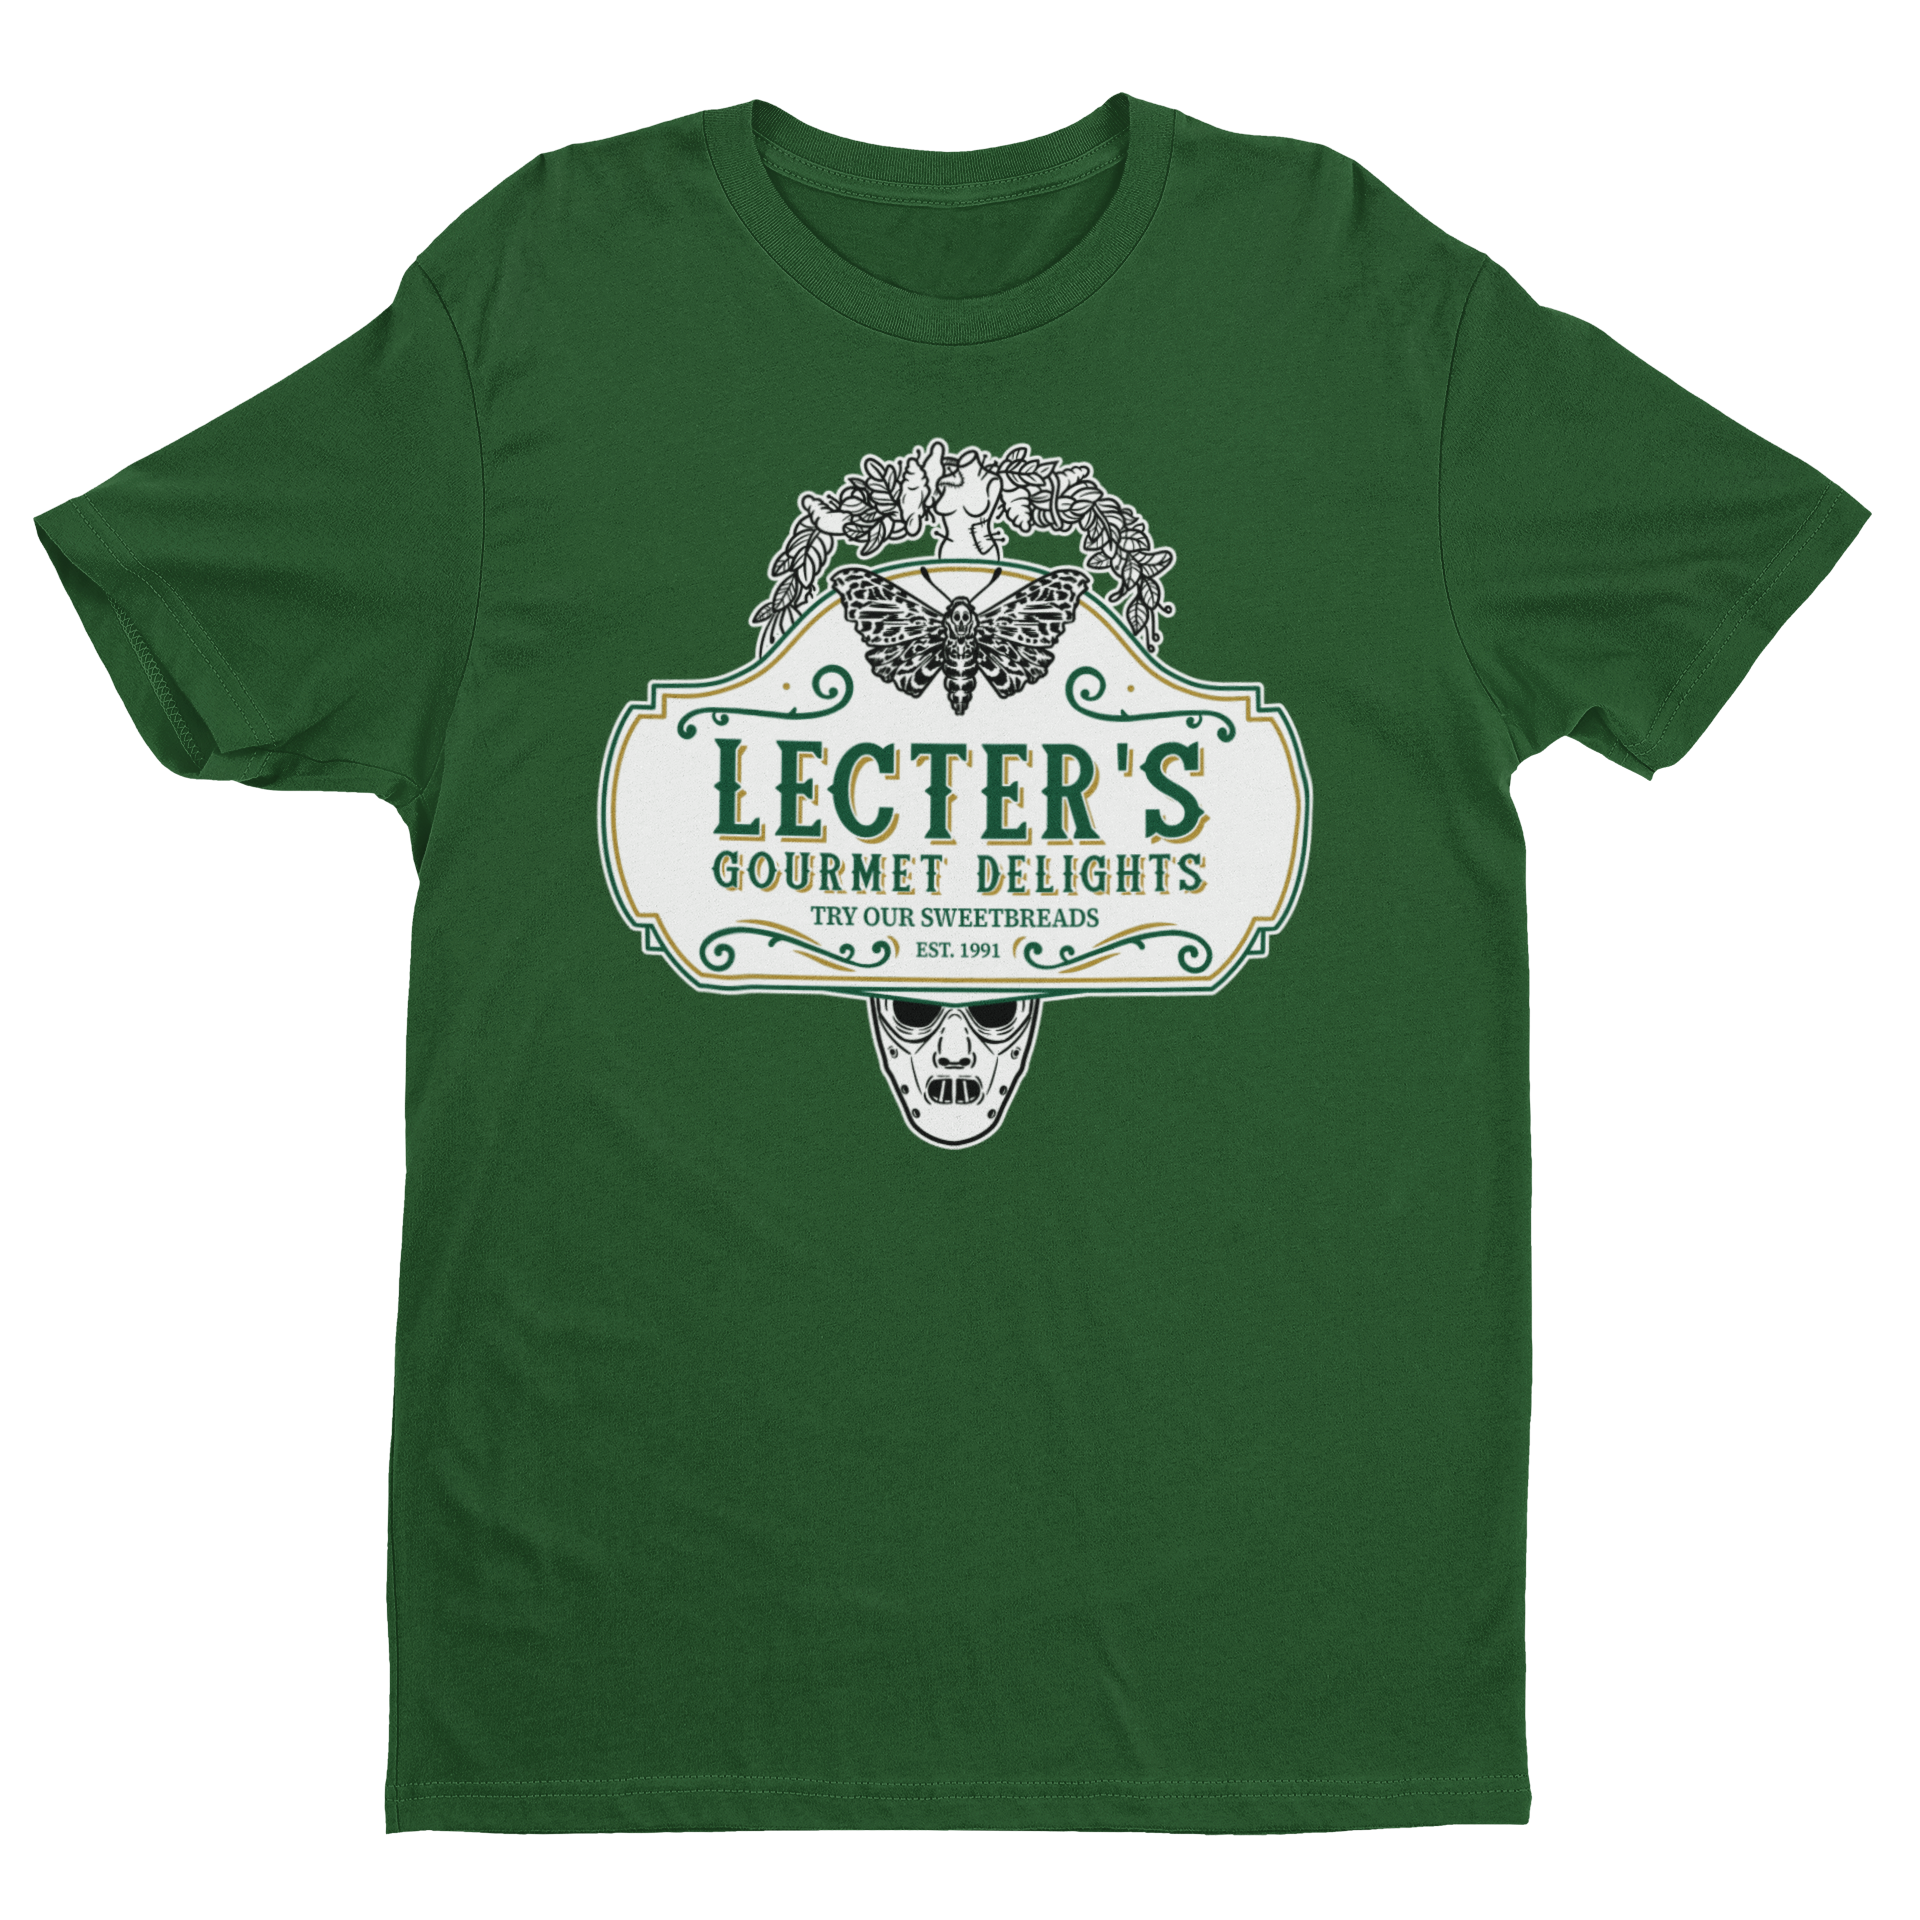 Lecter's Gourmet Delights T Shirt